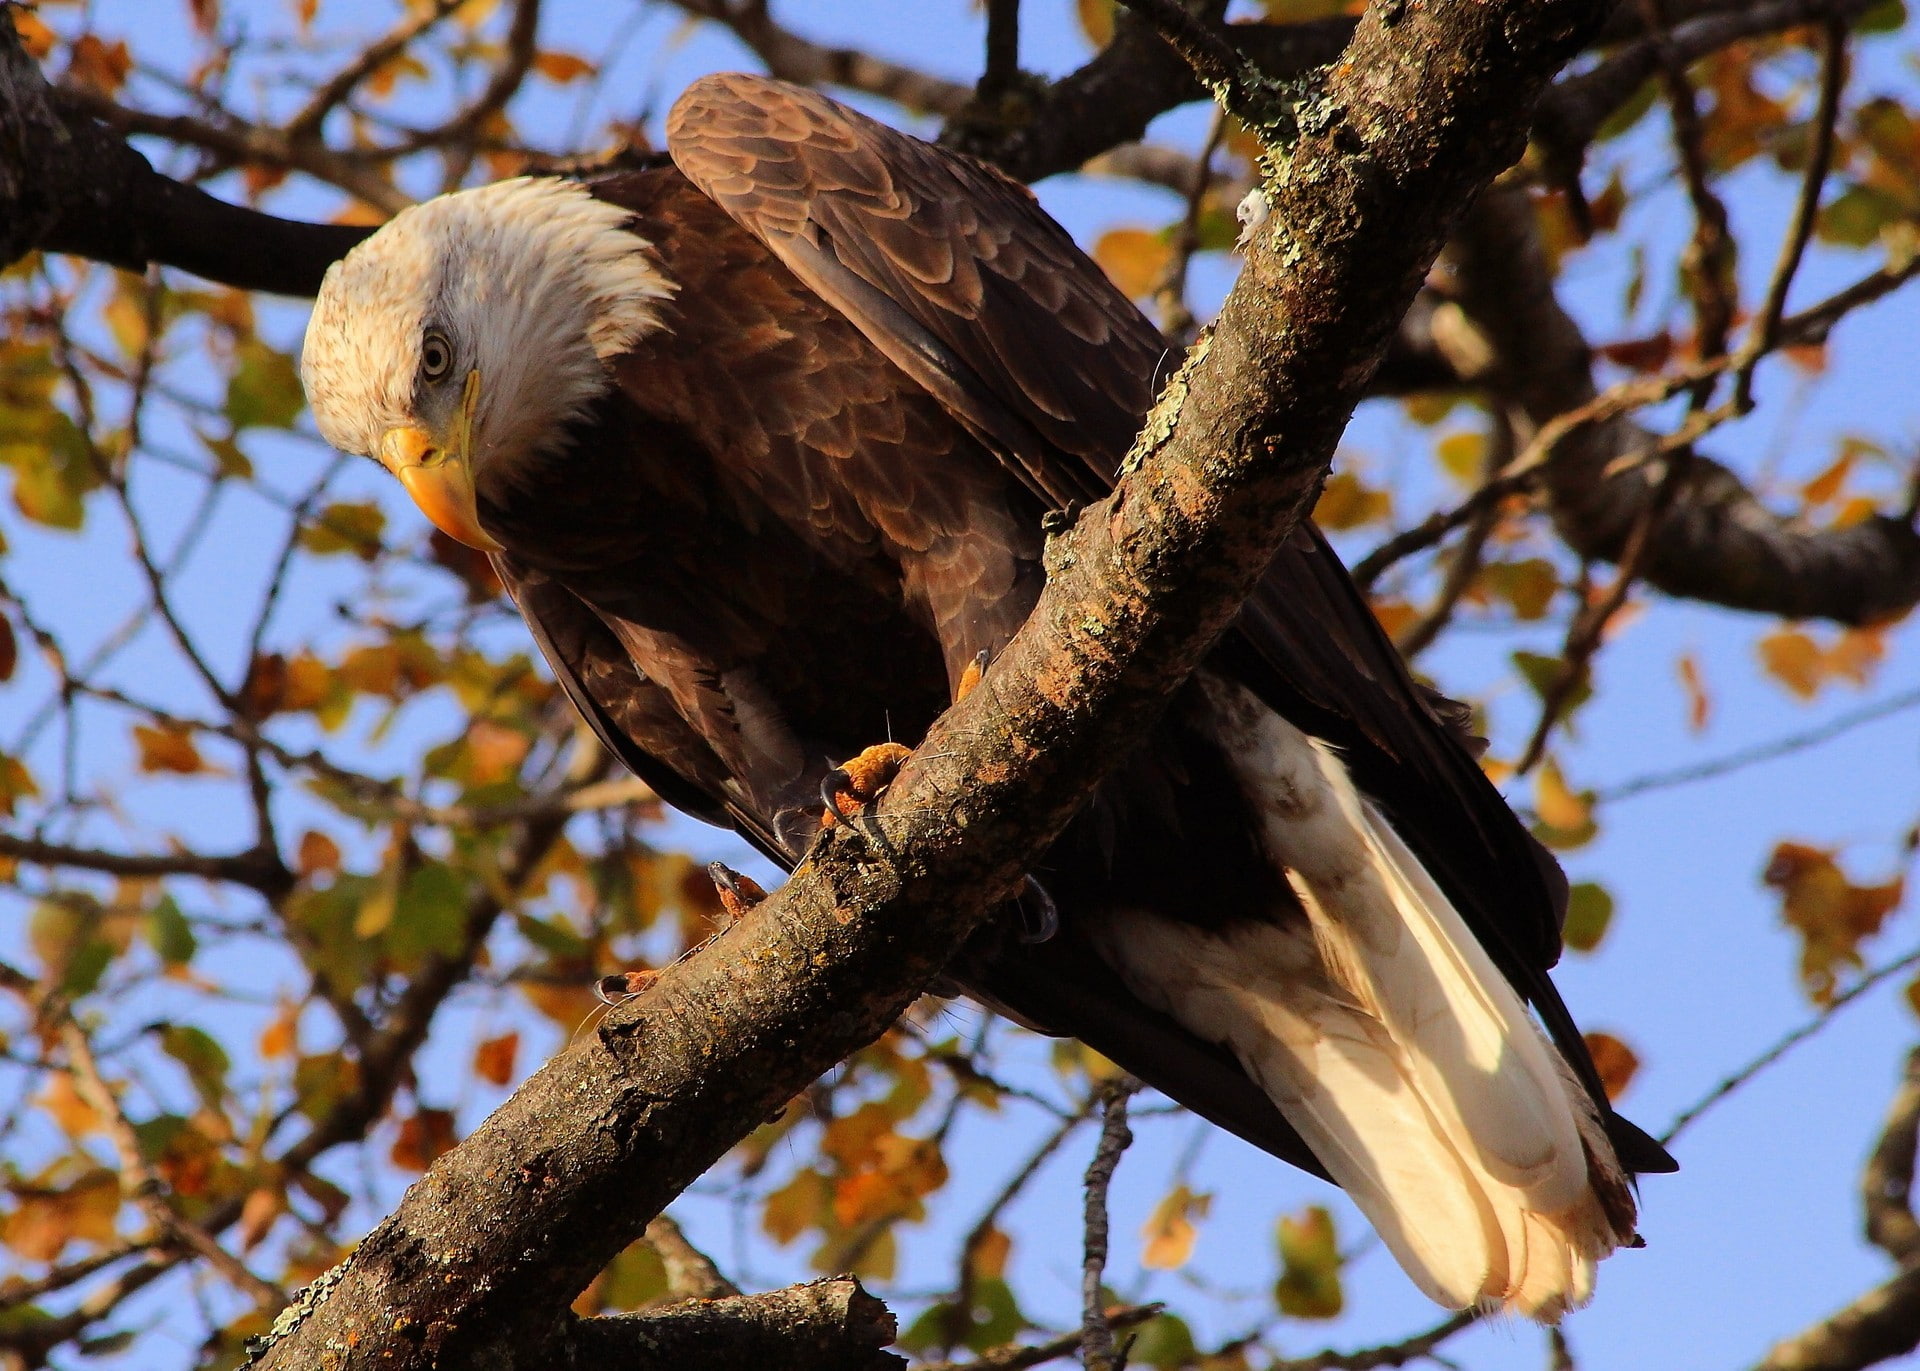 Bald eagle, bird, predator, tree, branch